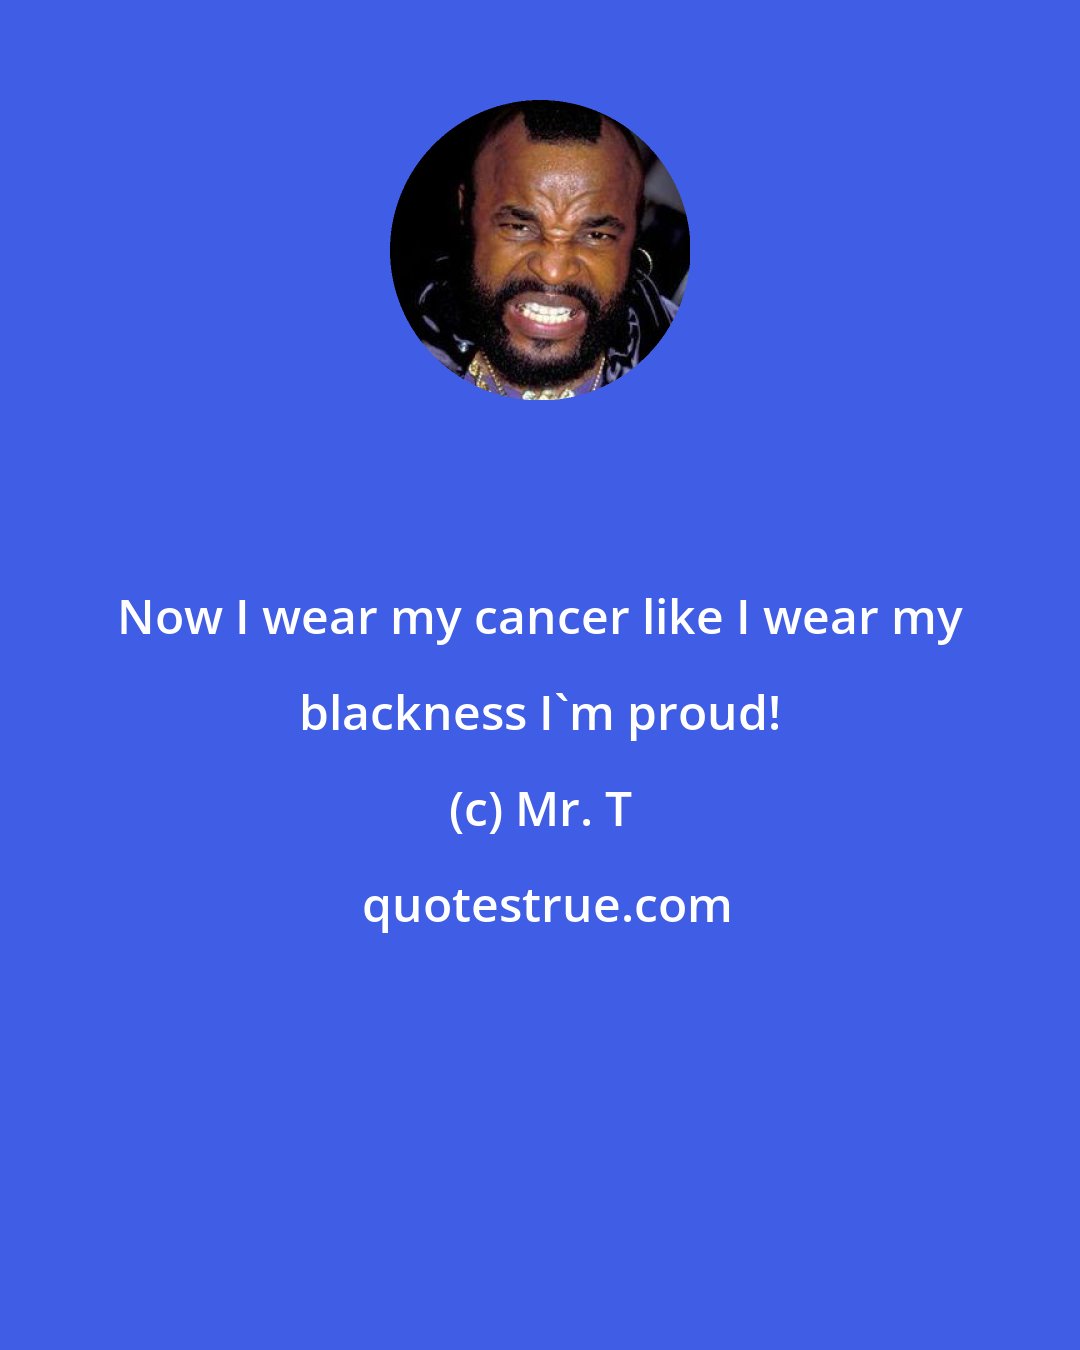 Mr. T: Now I wear my cancer like I wear my blackness I'm proud!